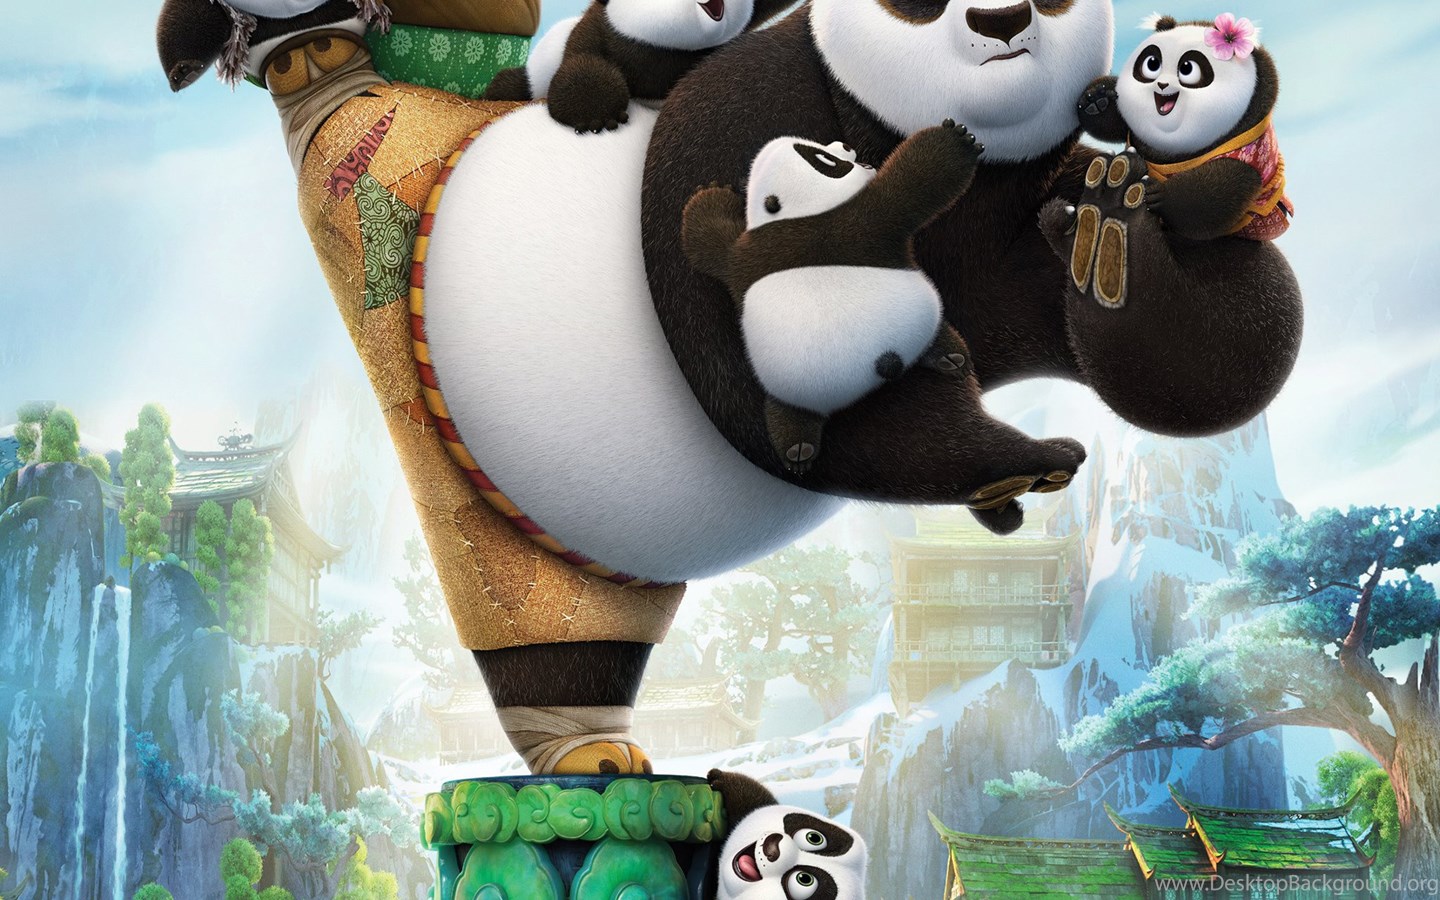 Download 57 iPad Wallpapers : Pack Of iPad WOD January 2016 Kung Fu Panda 3 ... W...